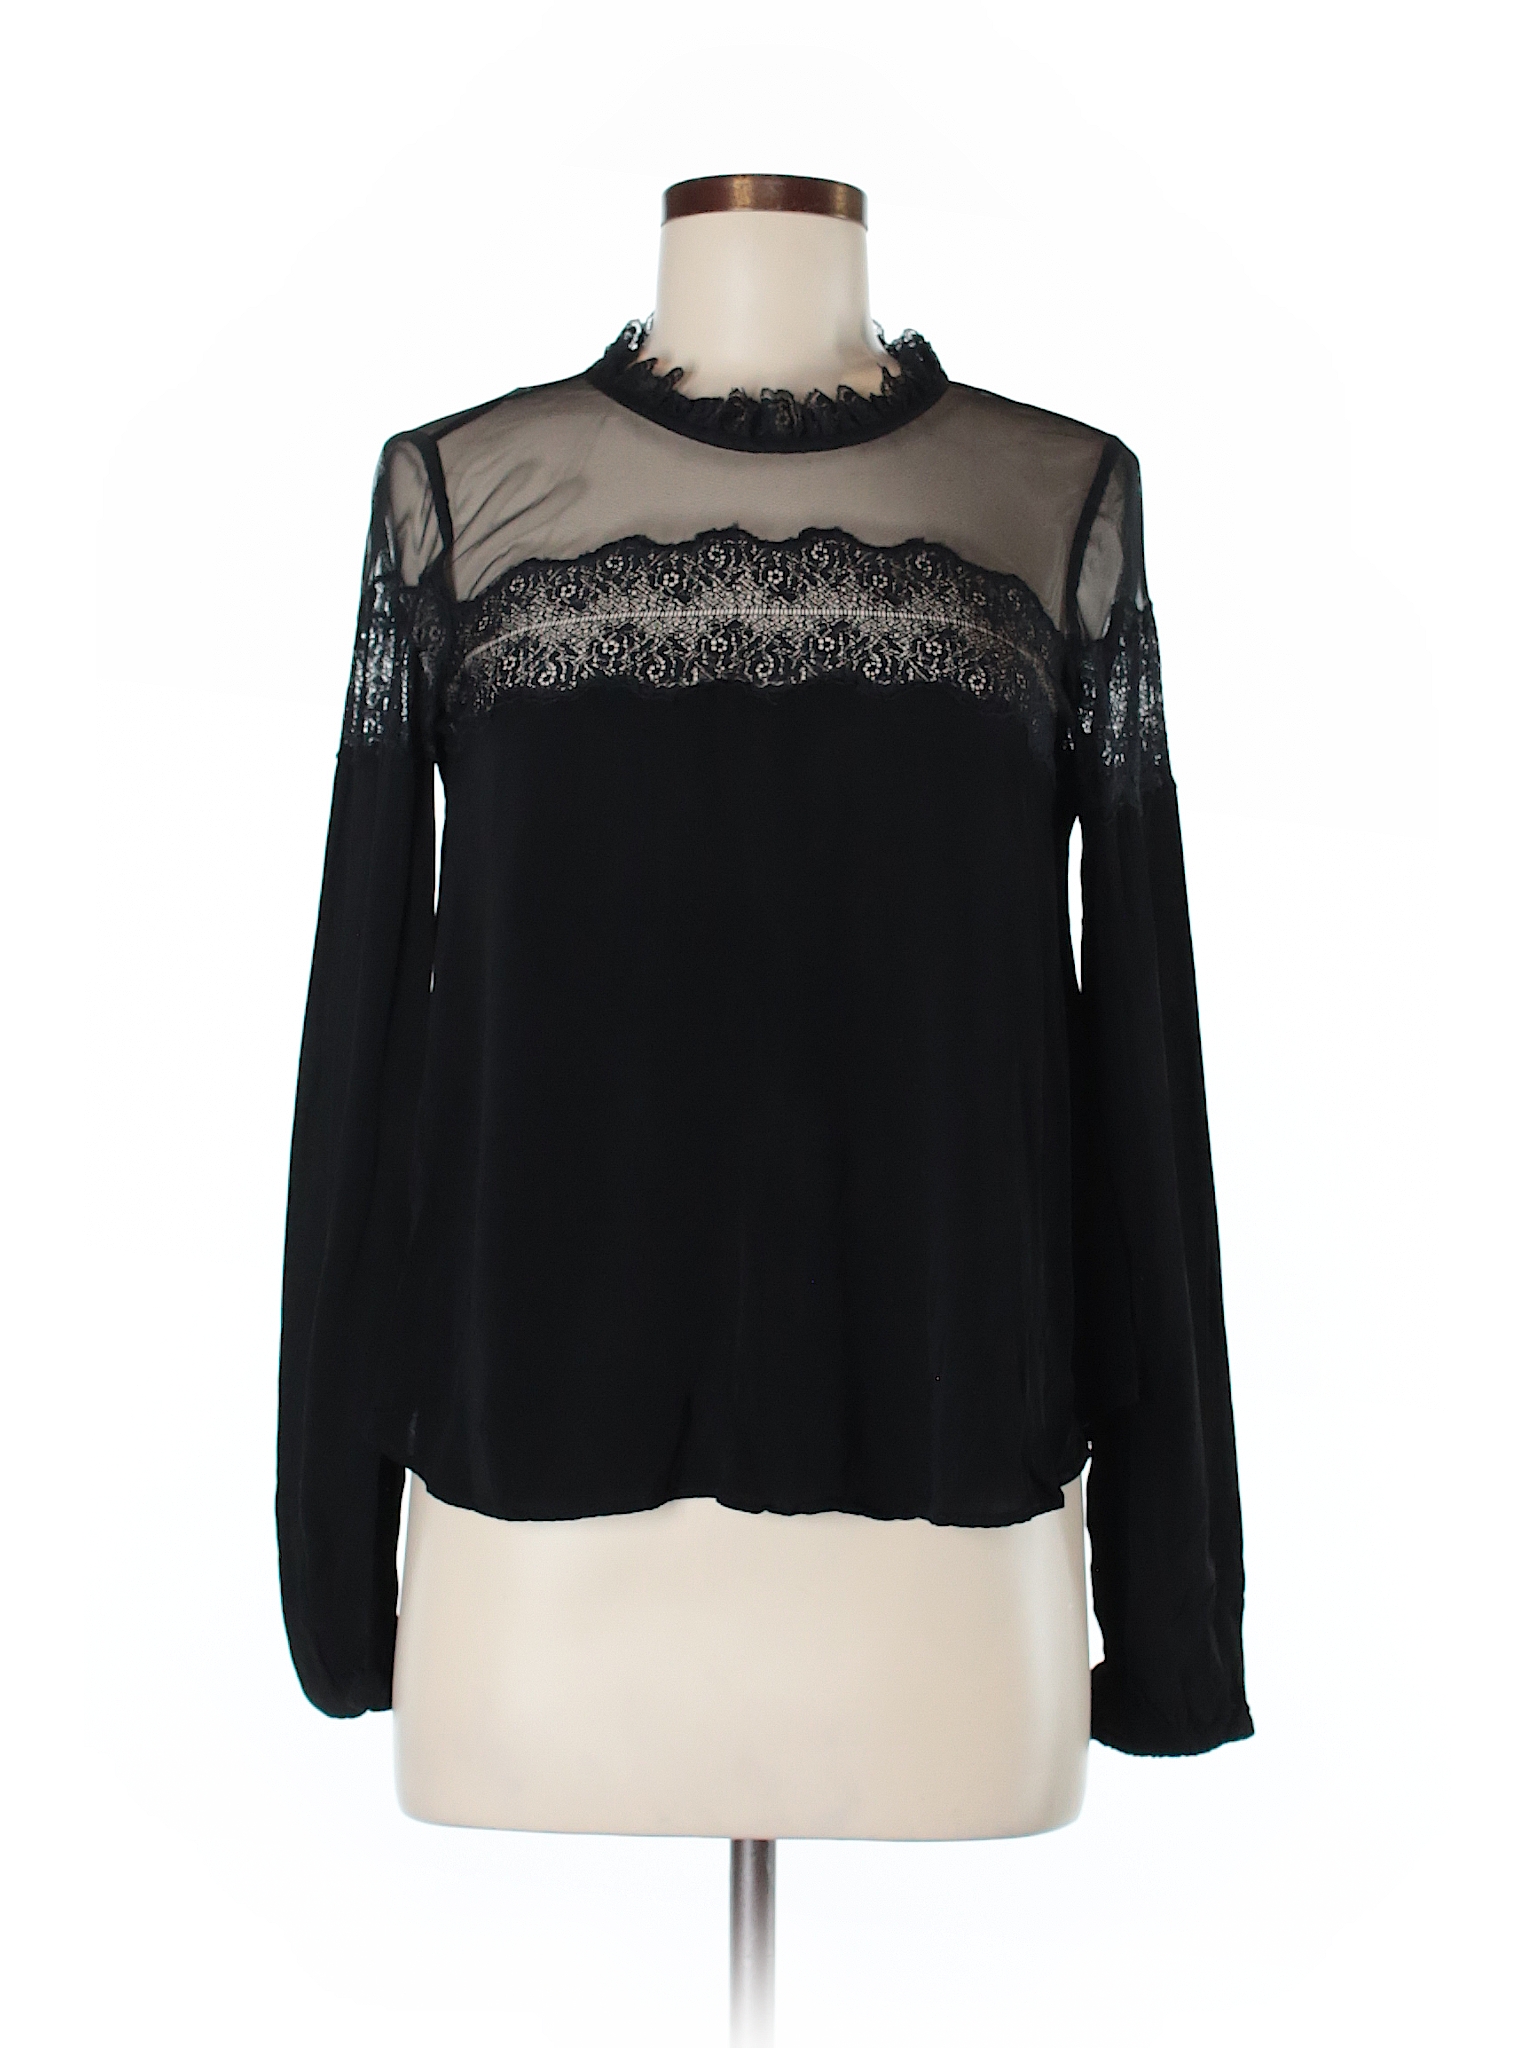 Trafaluc by Zara 100% Polyester Lace Black Long Sleeve Blouse Size M ...